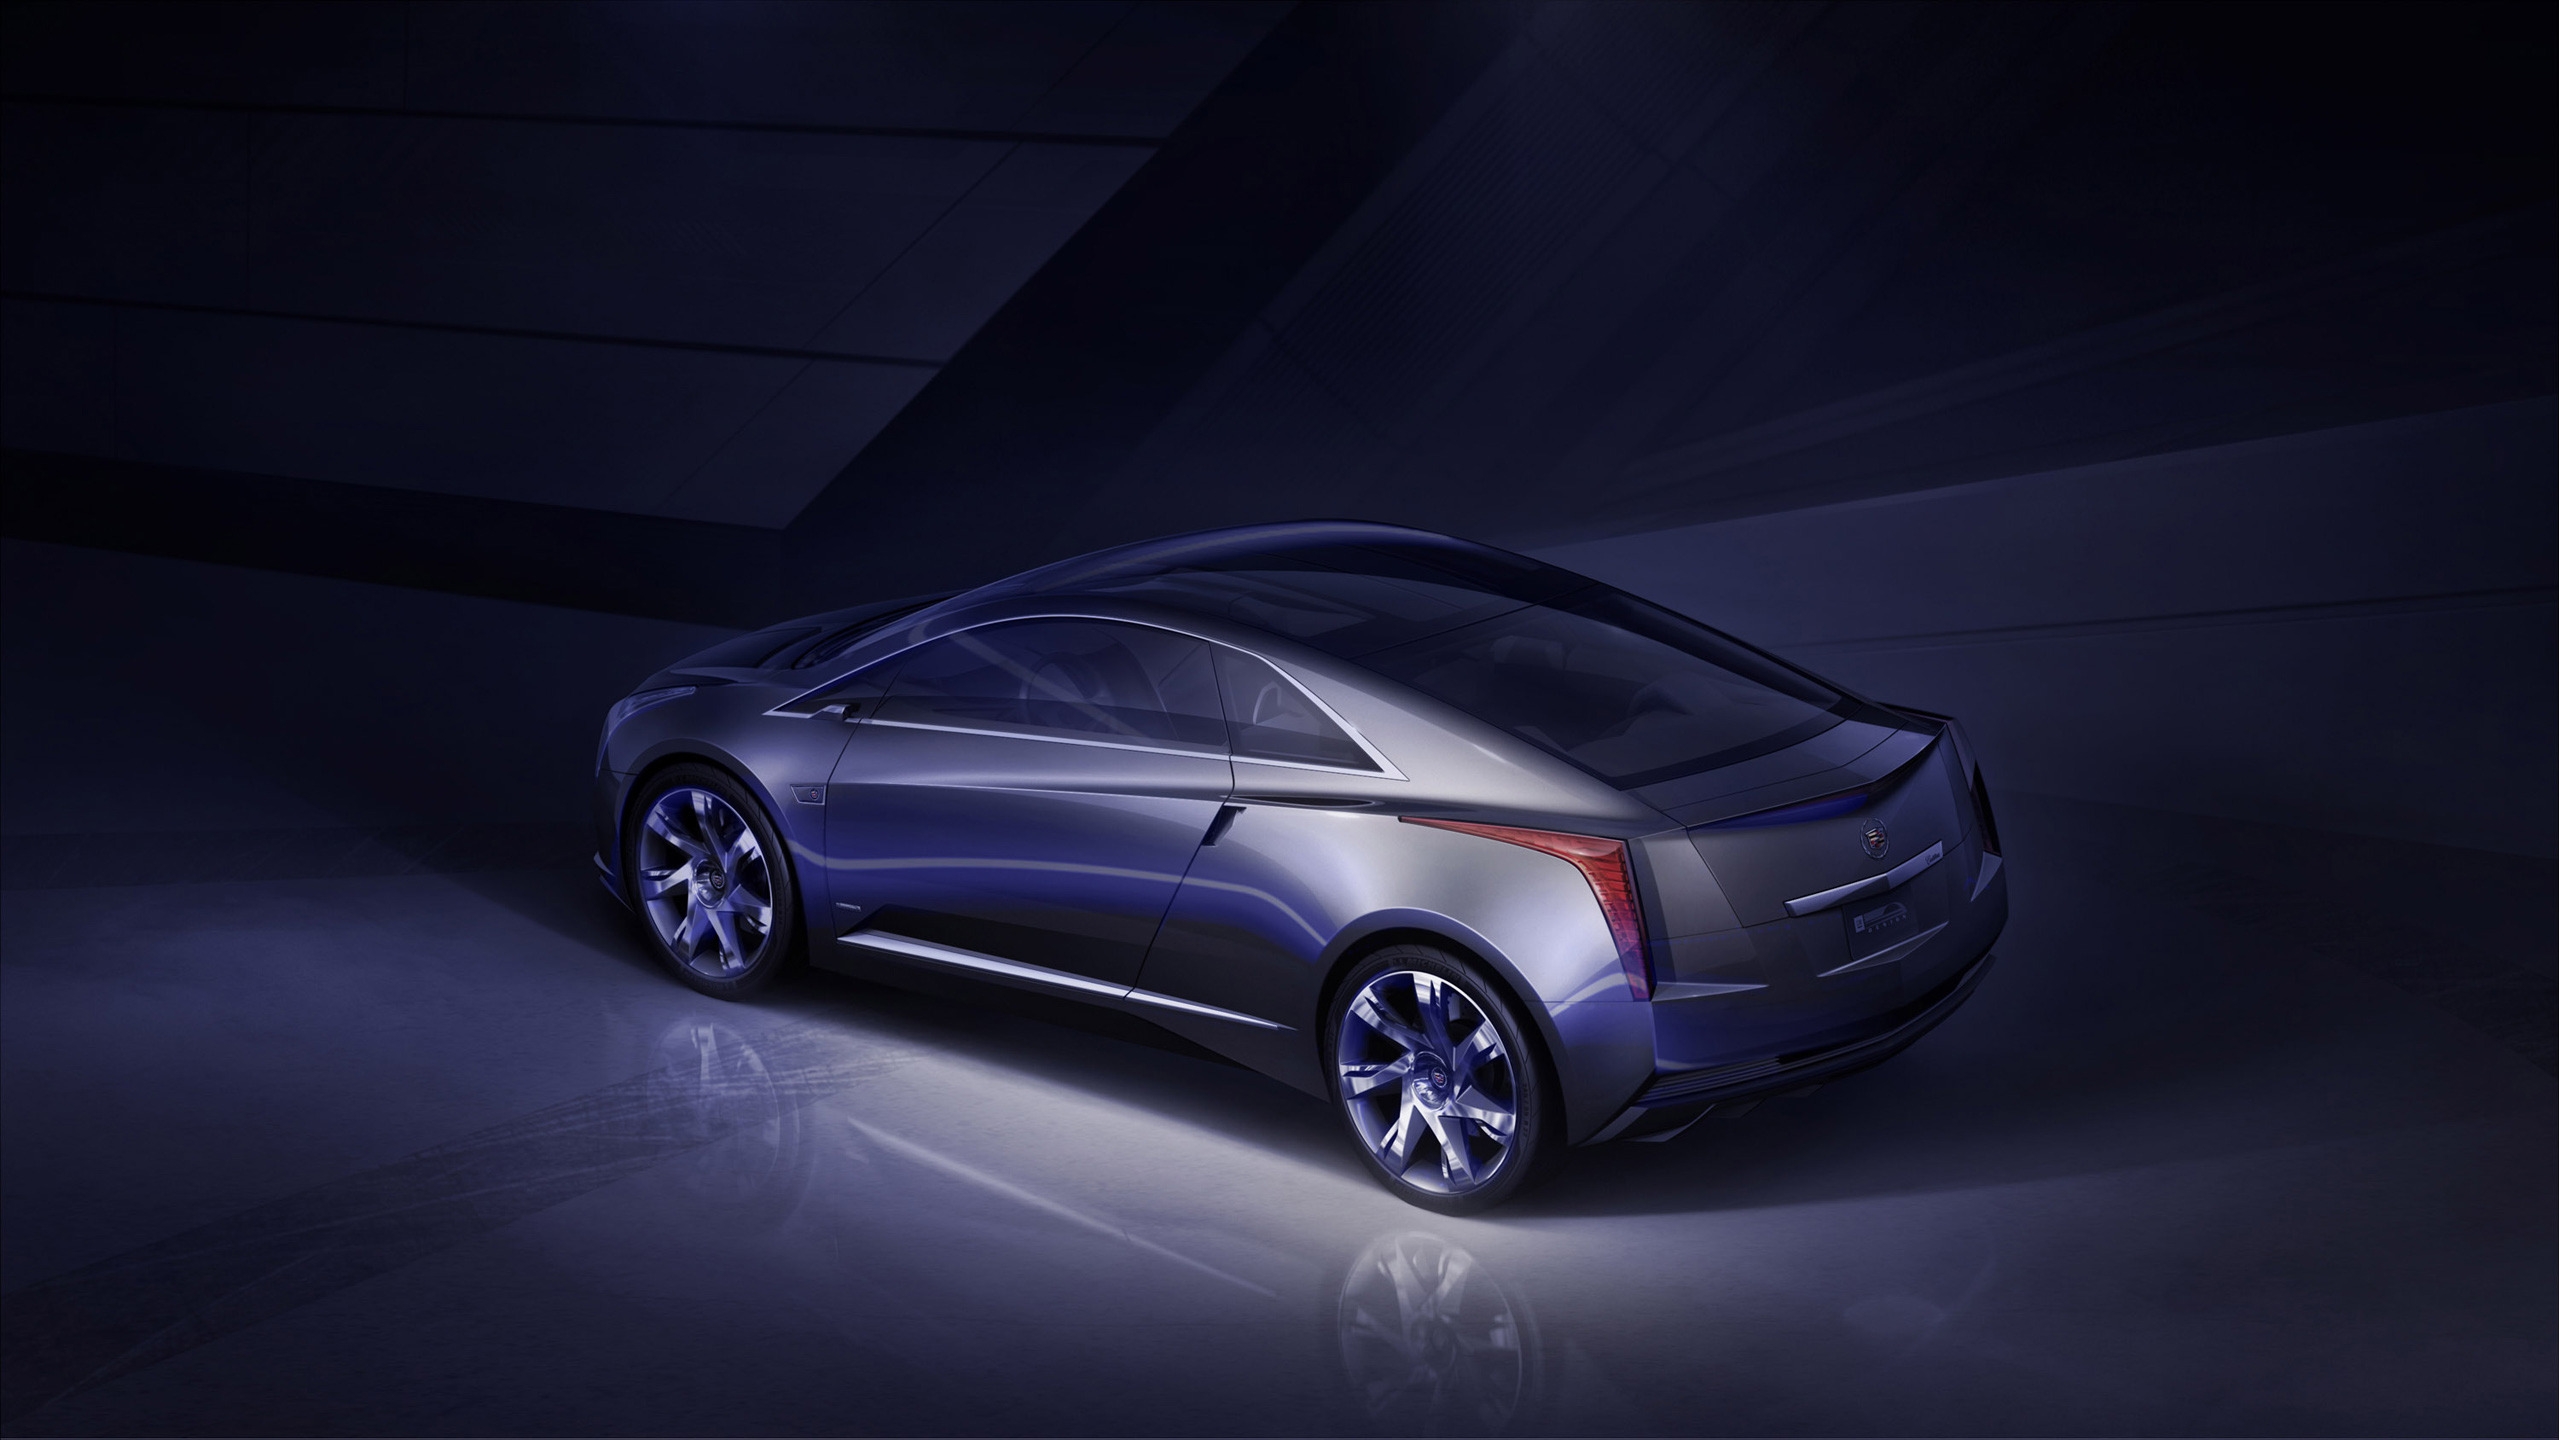 Cadillac Converj Concept Car for 2560x1440 HDTV resolution